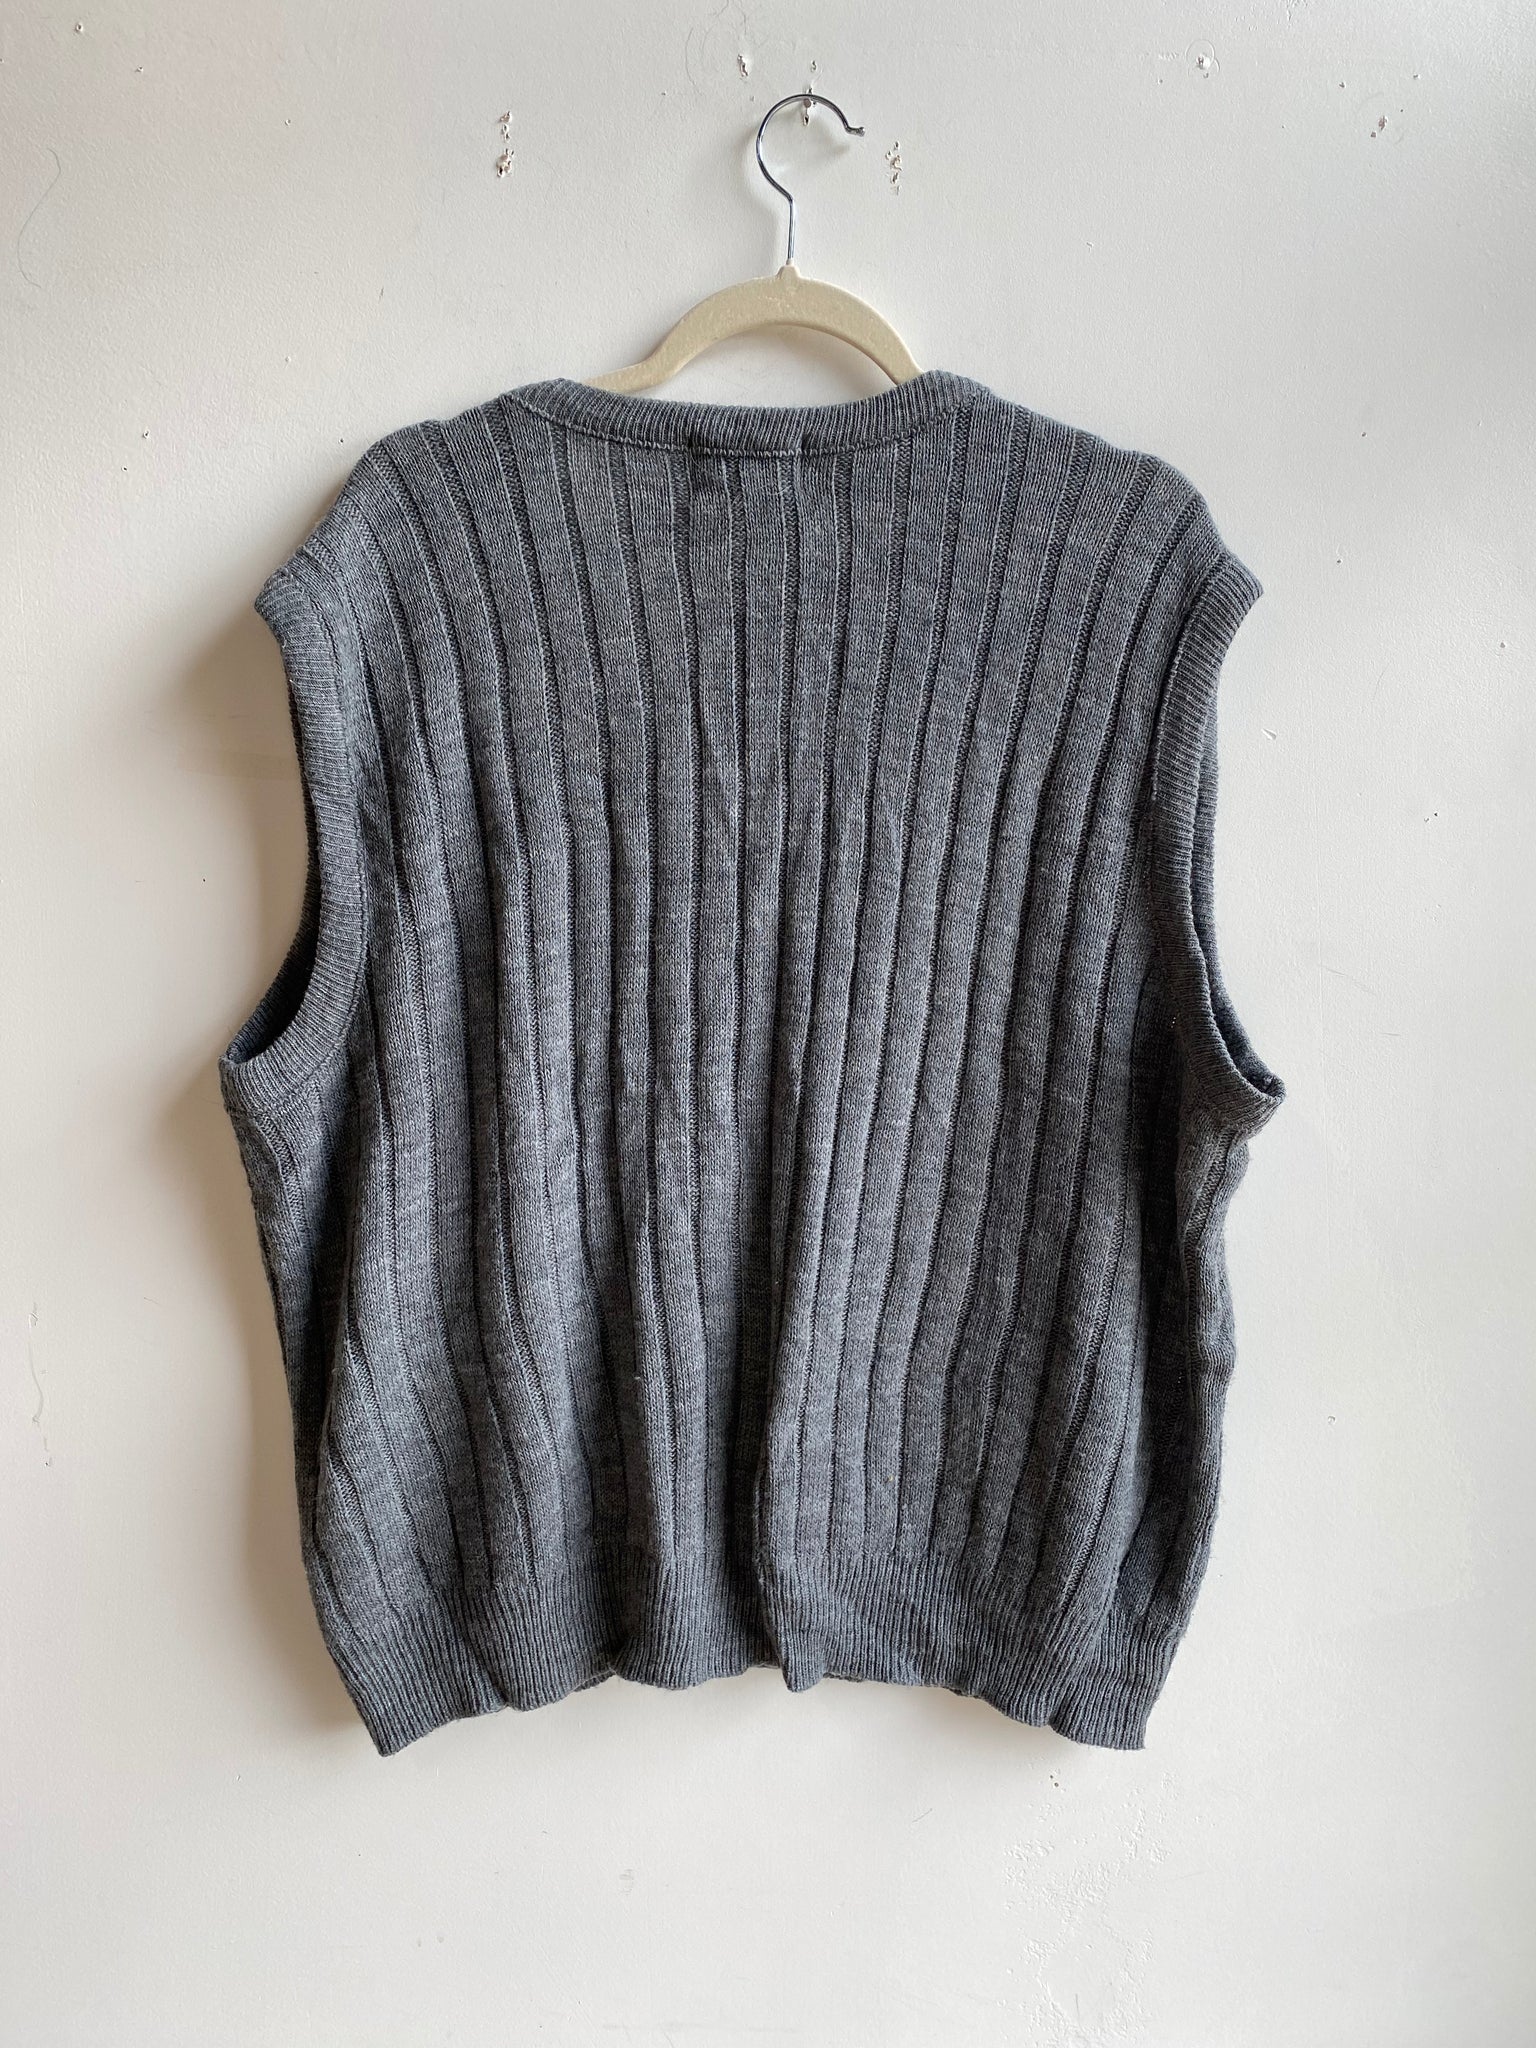 90s "Milford" Grey Knit Sweater Vest